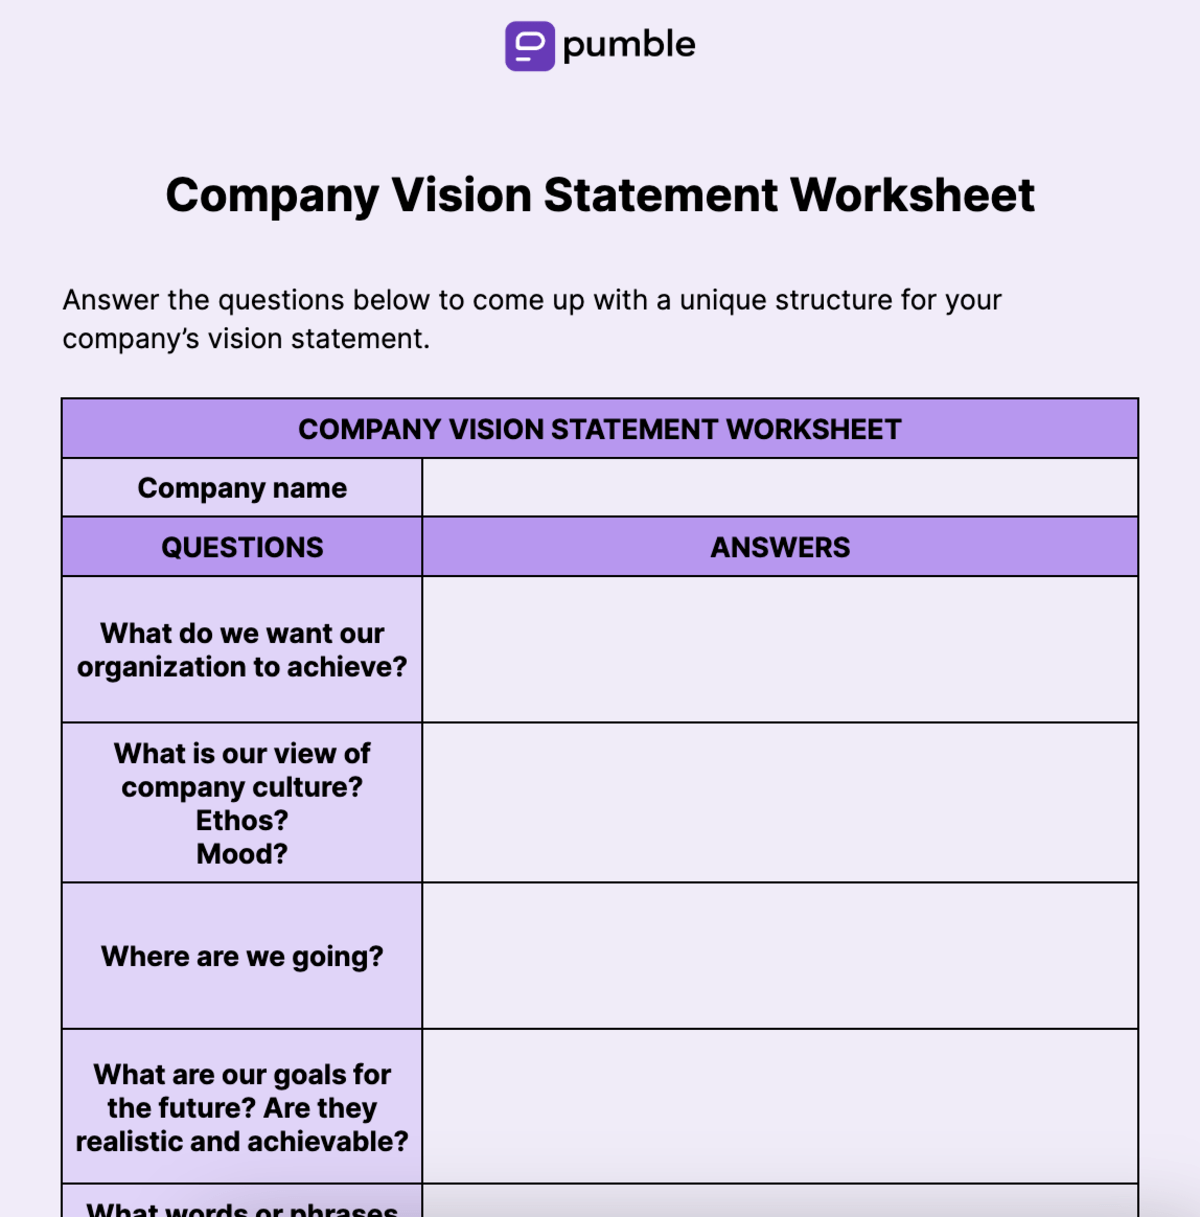 Company Vision Statement Worksheet